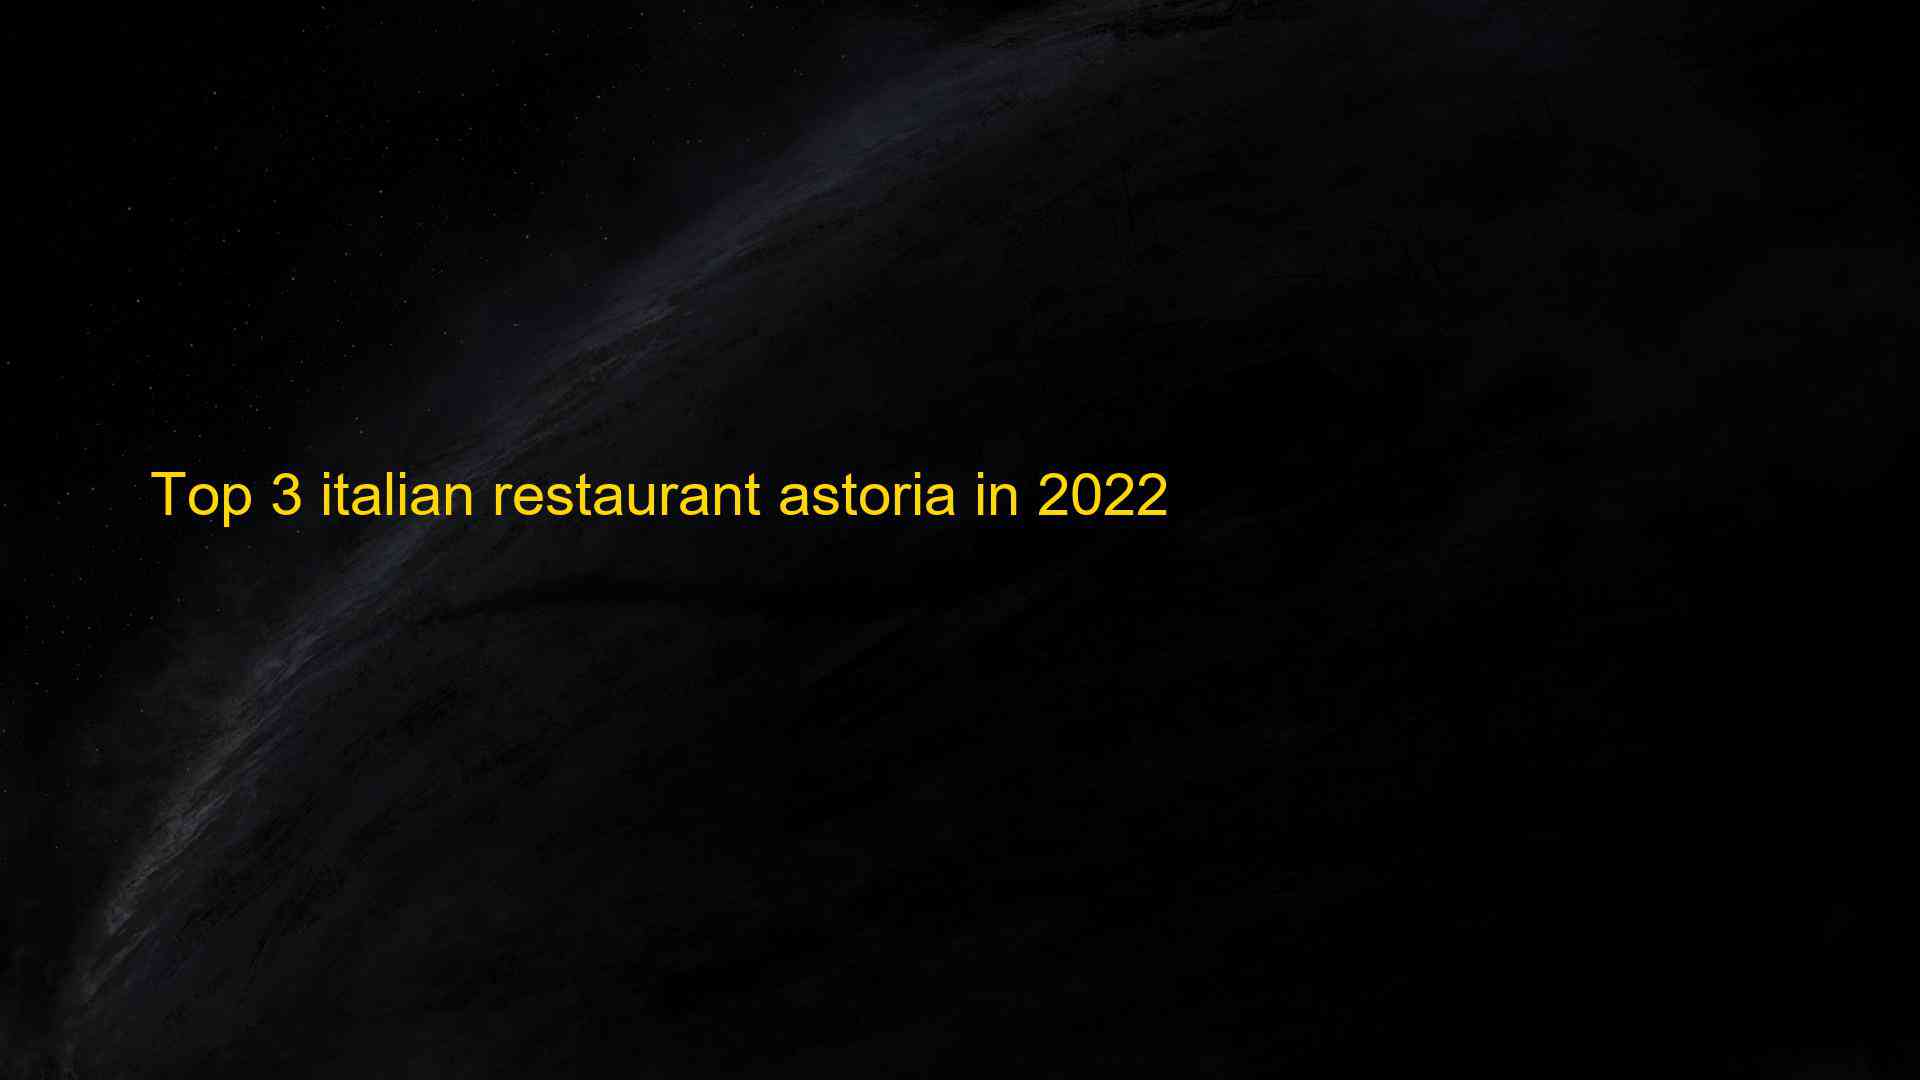 Top 3 italian restaurant astoria in 2022 1663003963